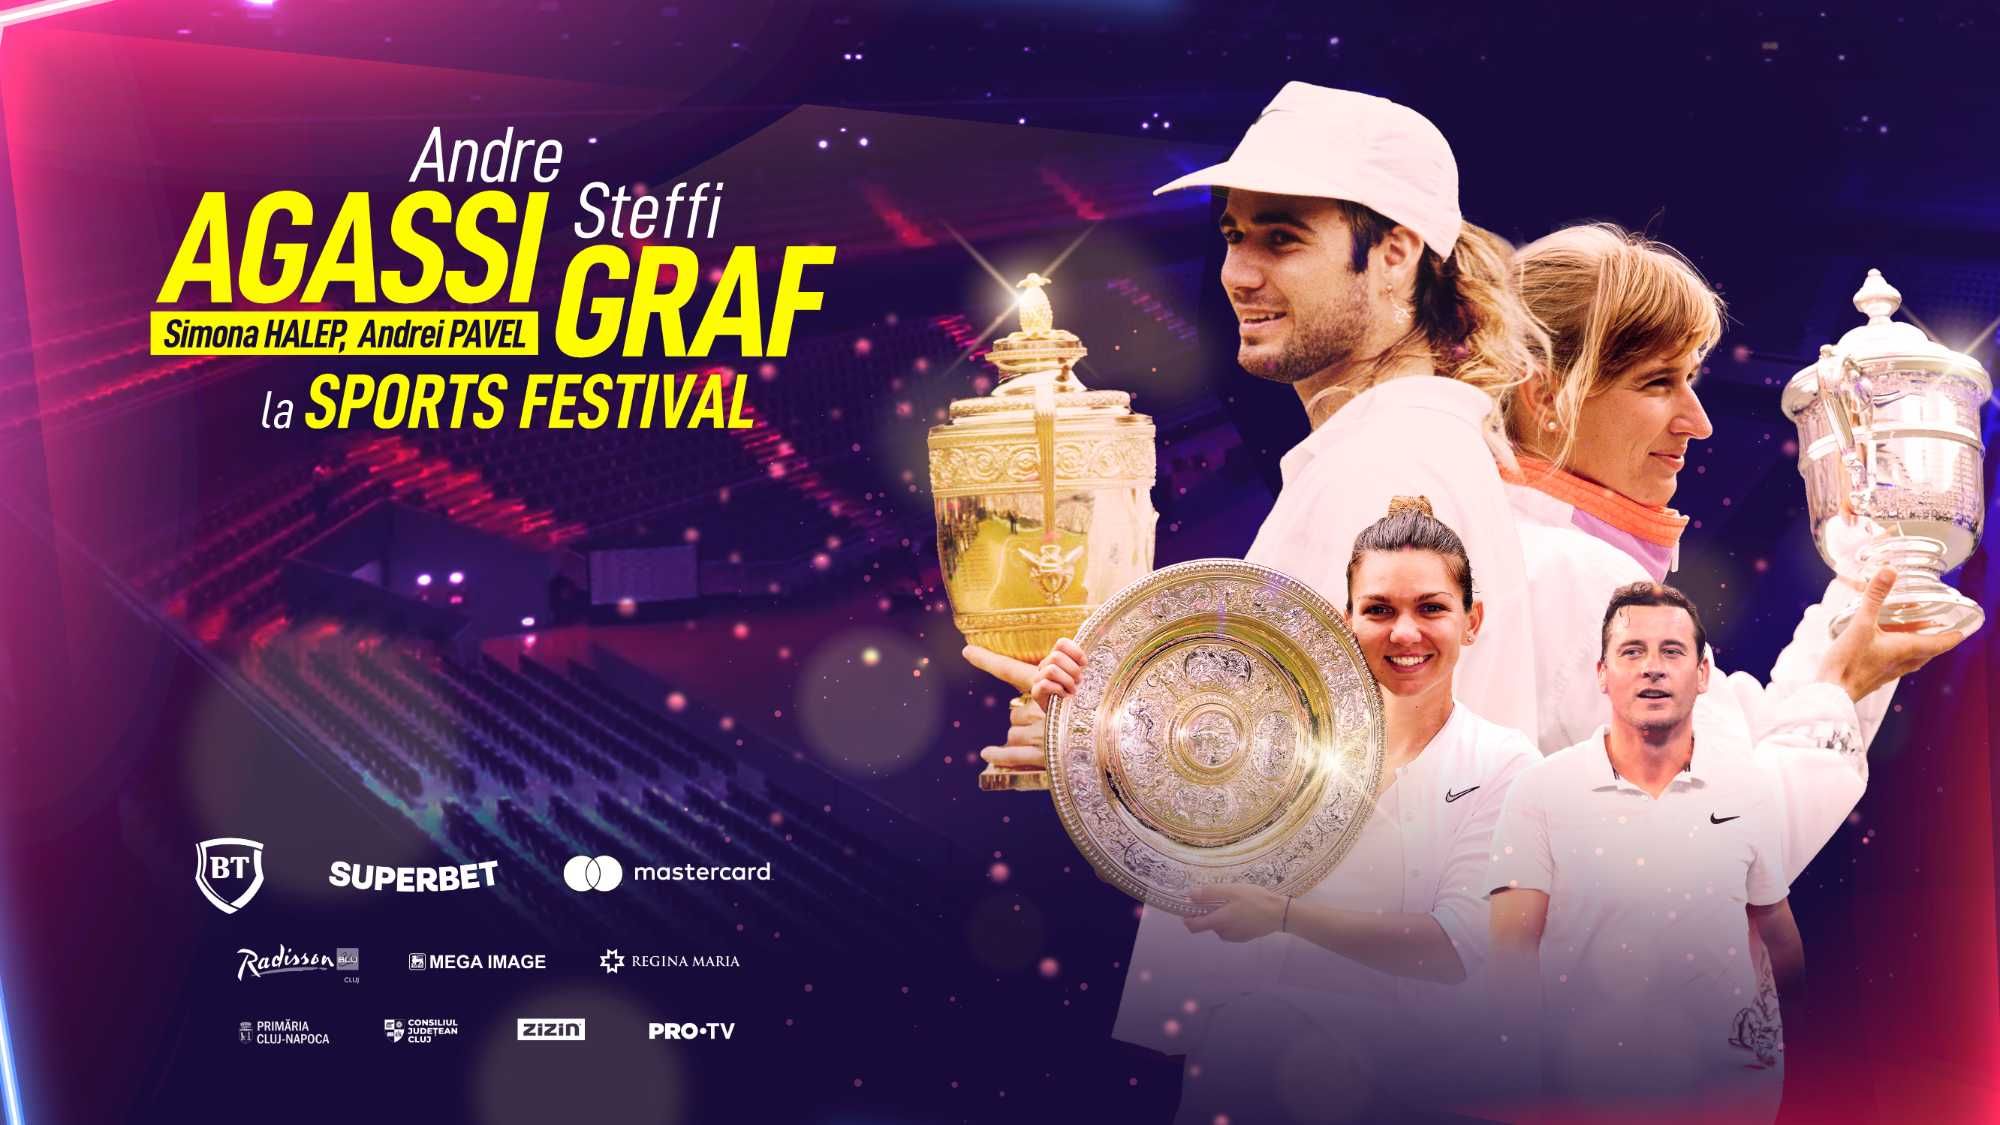 Bilete Sports Festival Agassi Steffi Graf Simona Halep și Andrei Pavel